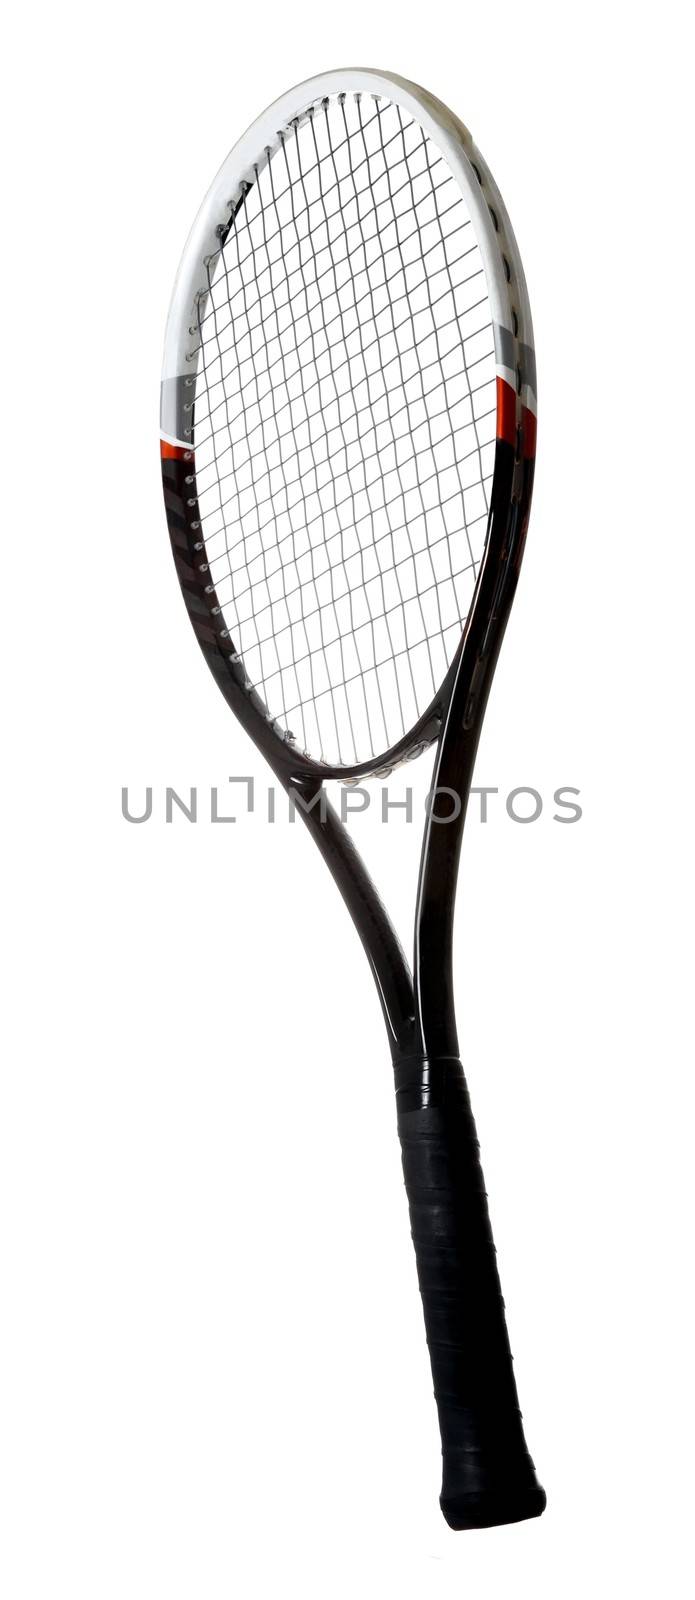 Tennis Racket Isolated by fouroaks